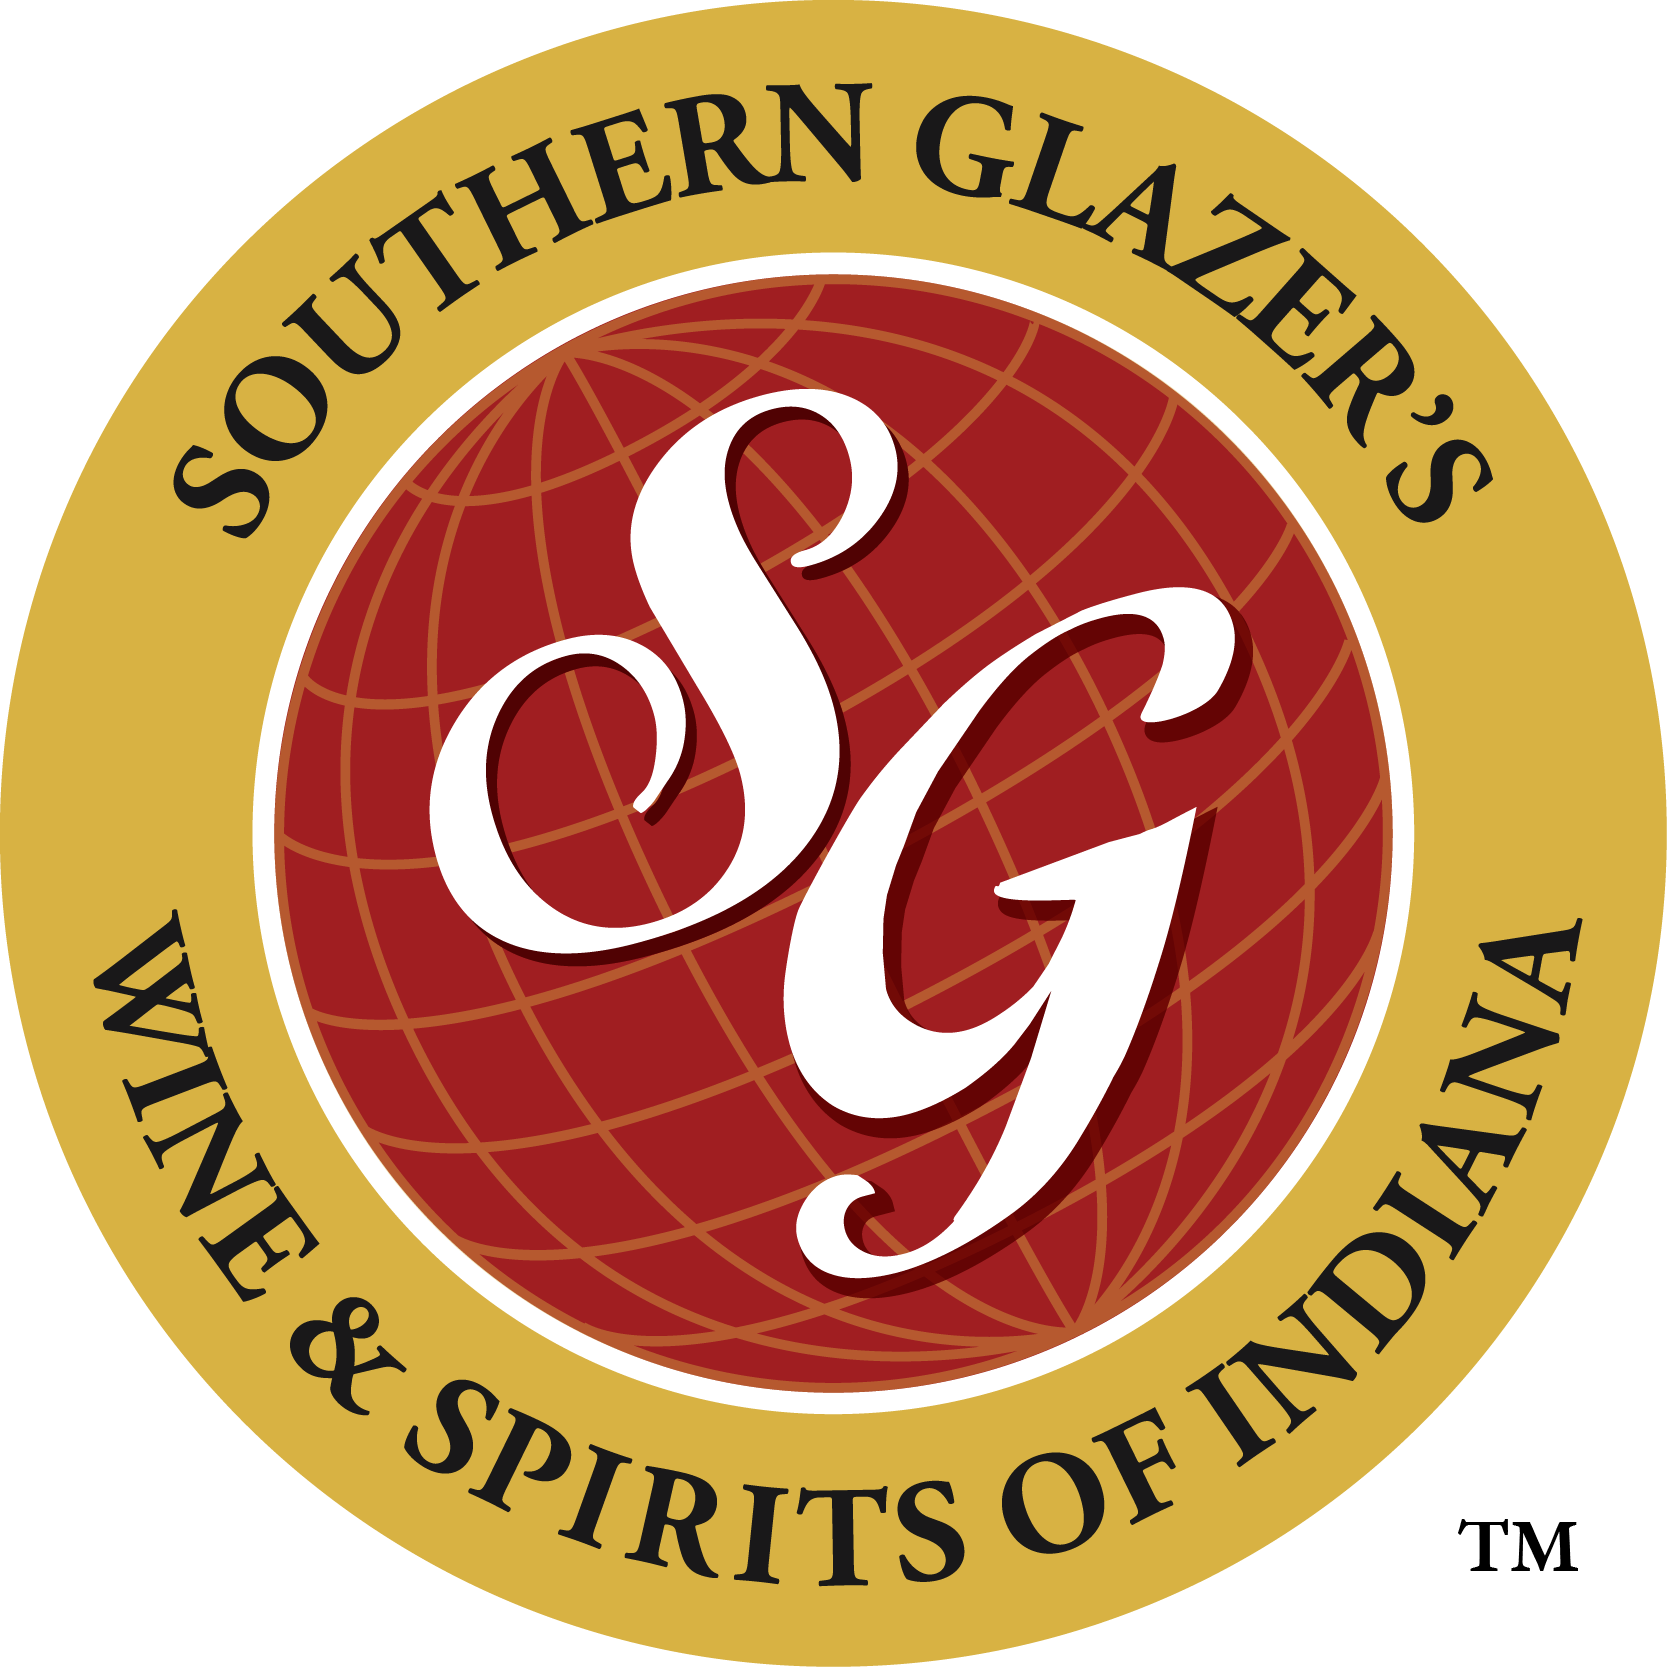 Southern Glazer’s Wine & Spirits of Indiana